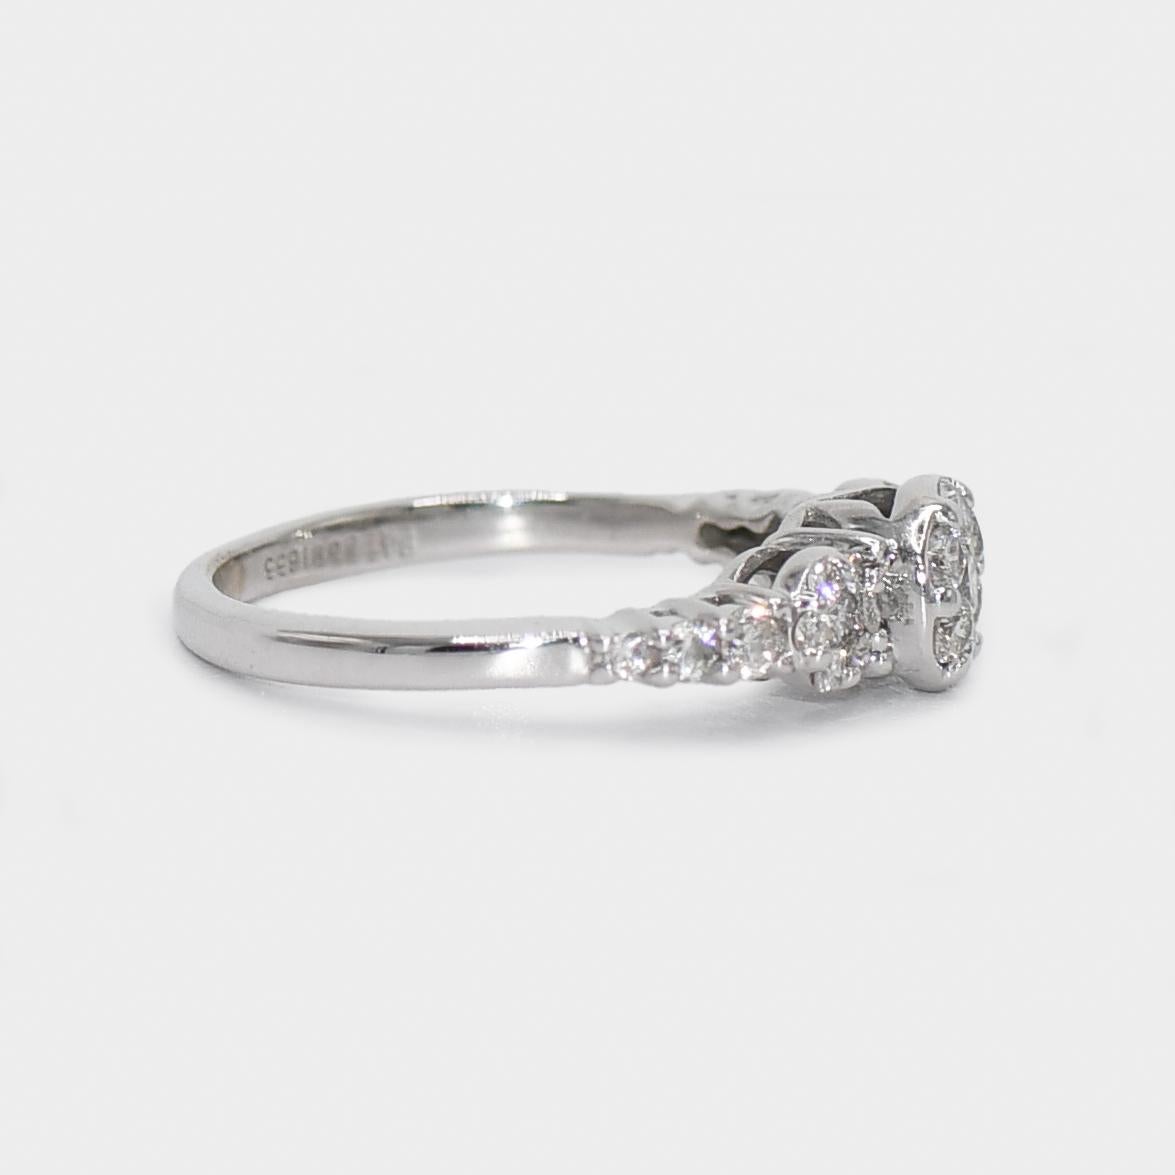 Brilliant Cut 14K White Gold Ladies' Diamond Cluster Ring 0.40tdw, 2.6g For Sale